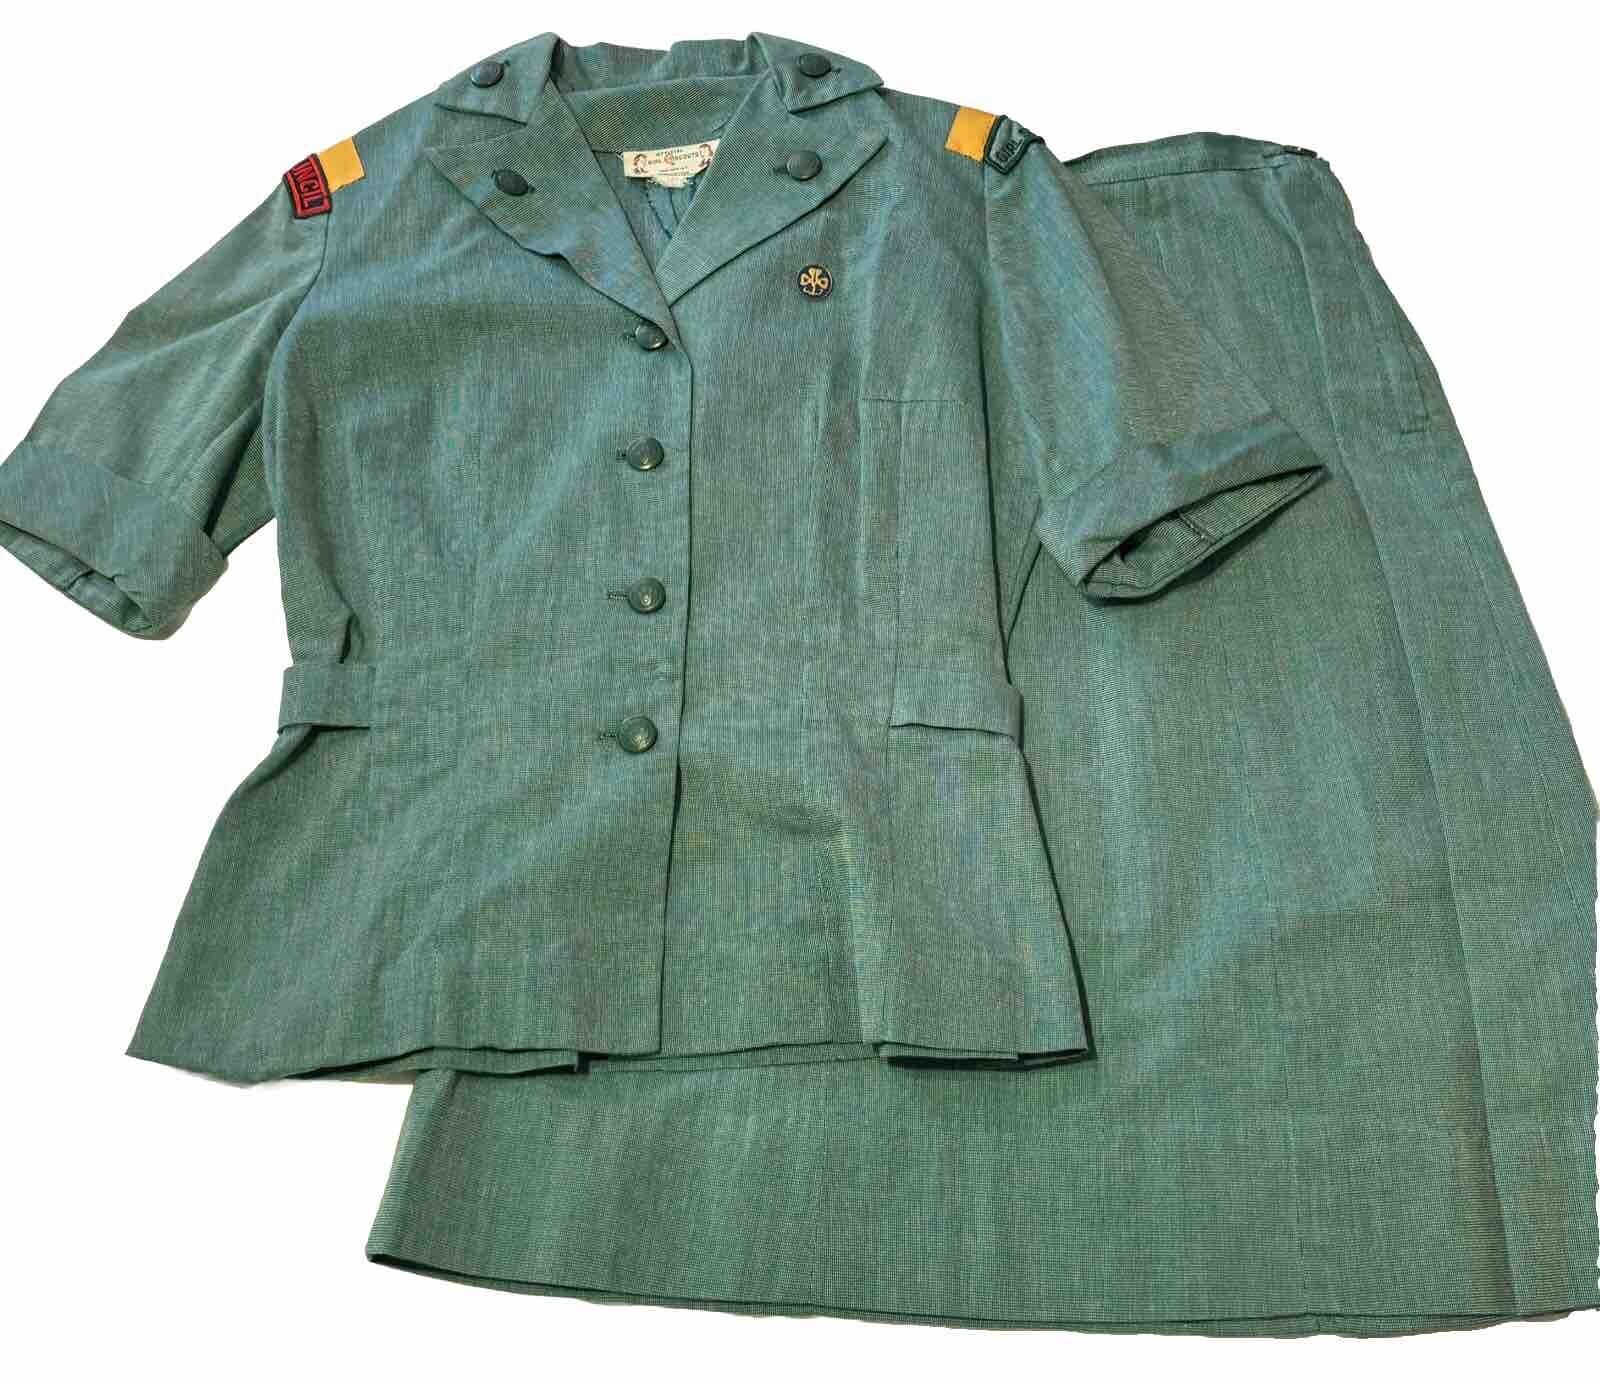 Vintage Girl Scouts uniform 1950s suit- Jacket, Skirt & Gold Filled Pin